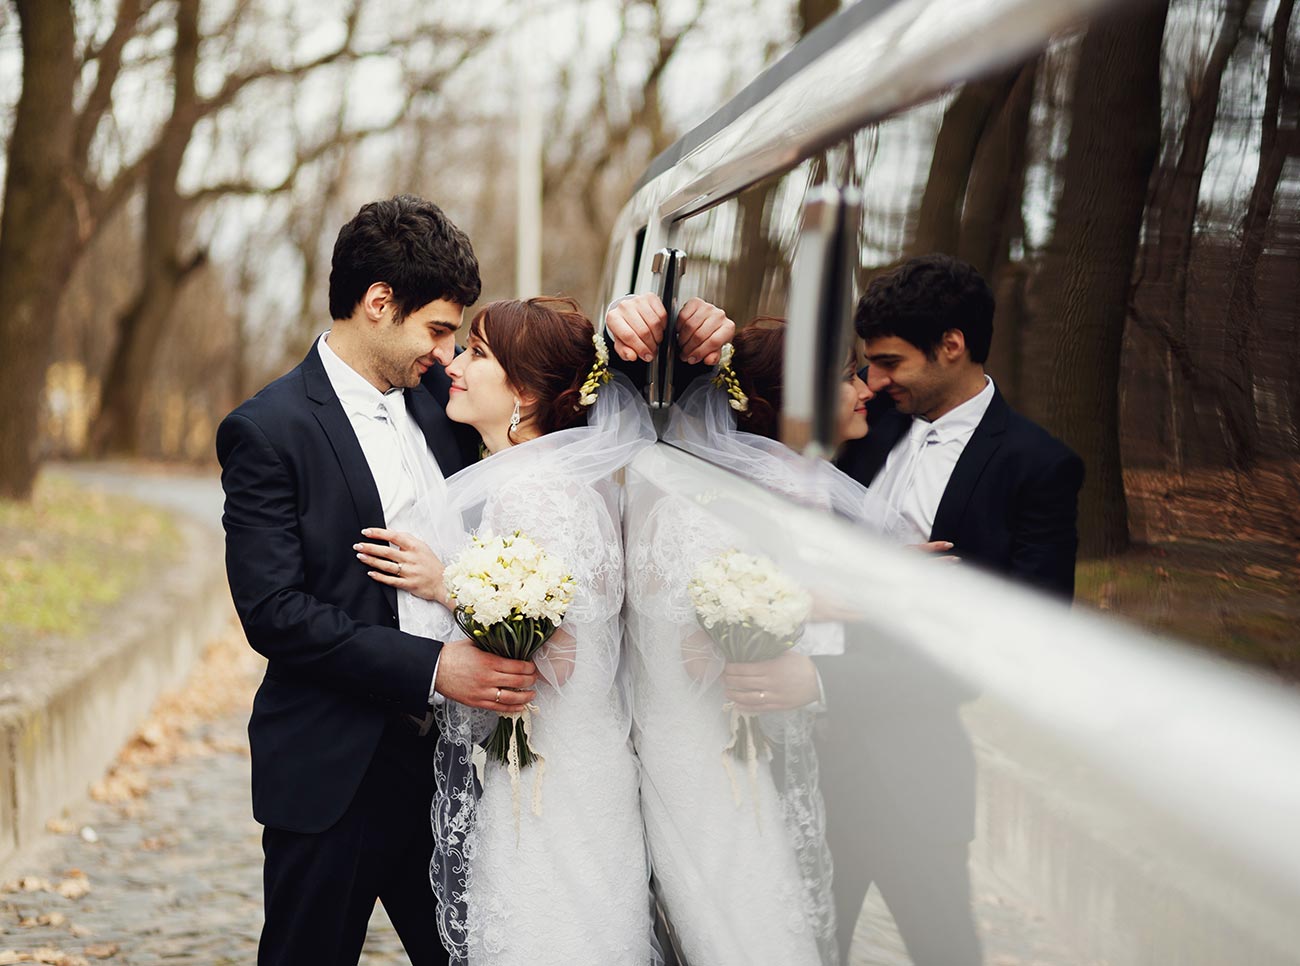 LI Wedding SUV and Unique Limos